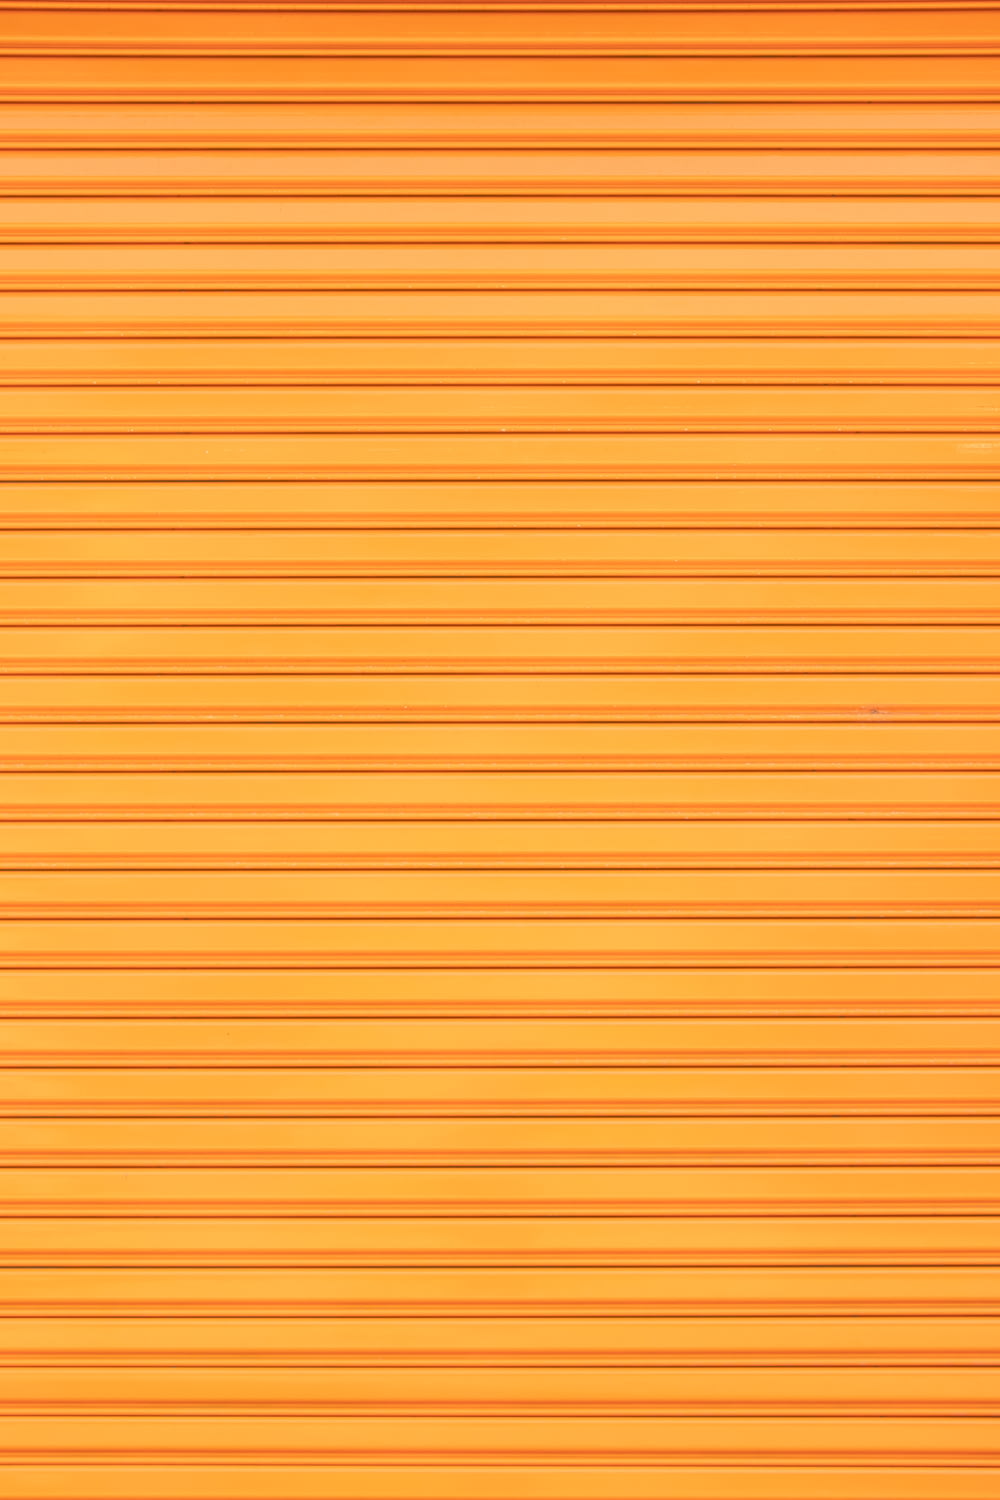 un fondo naranja con líneas horizontales